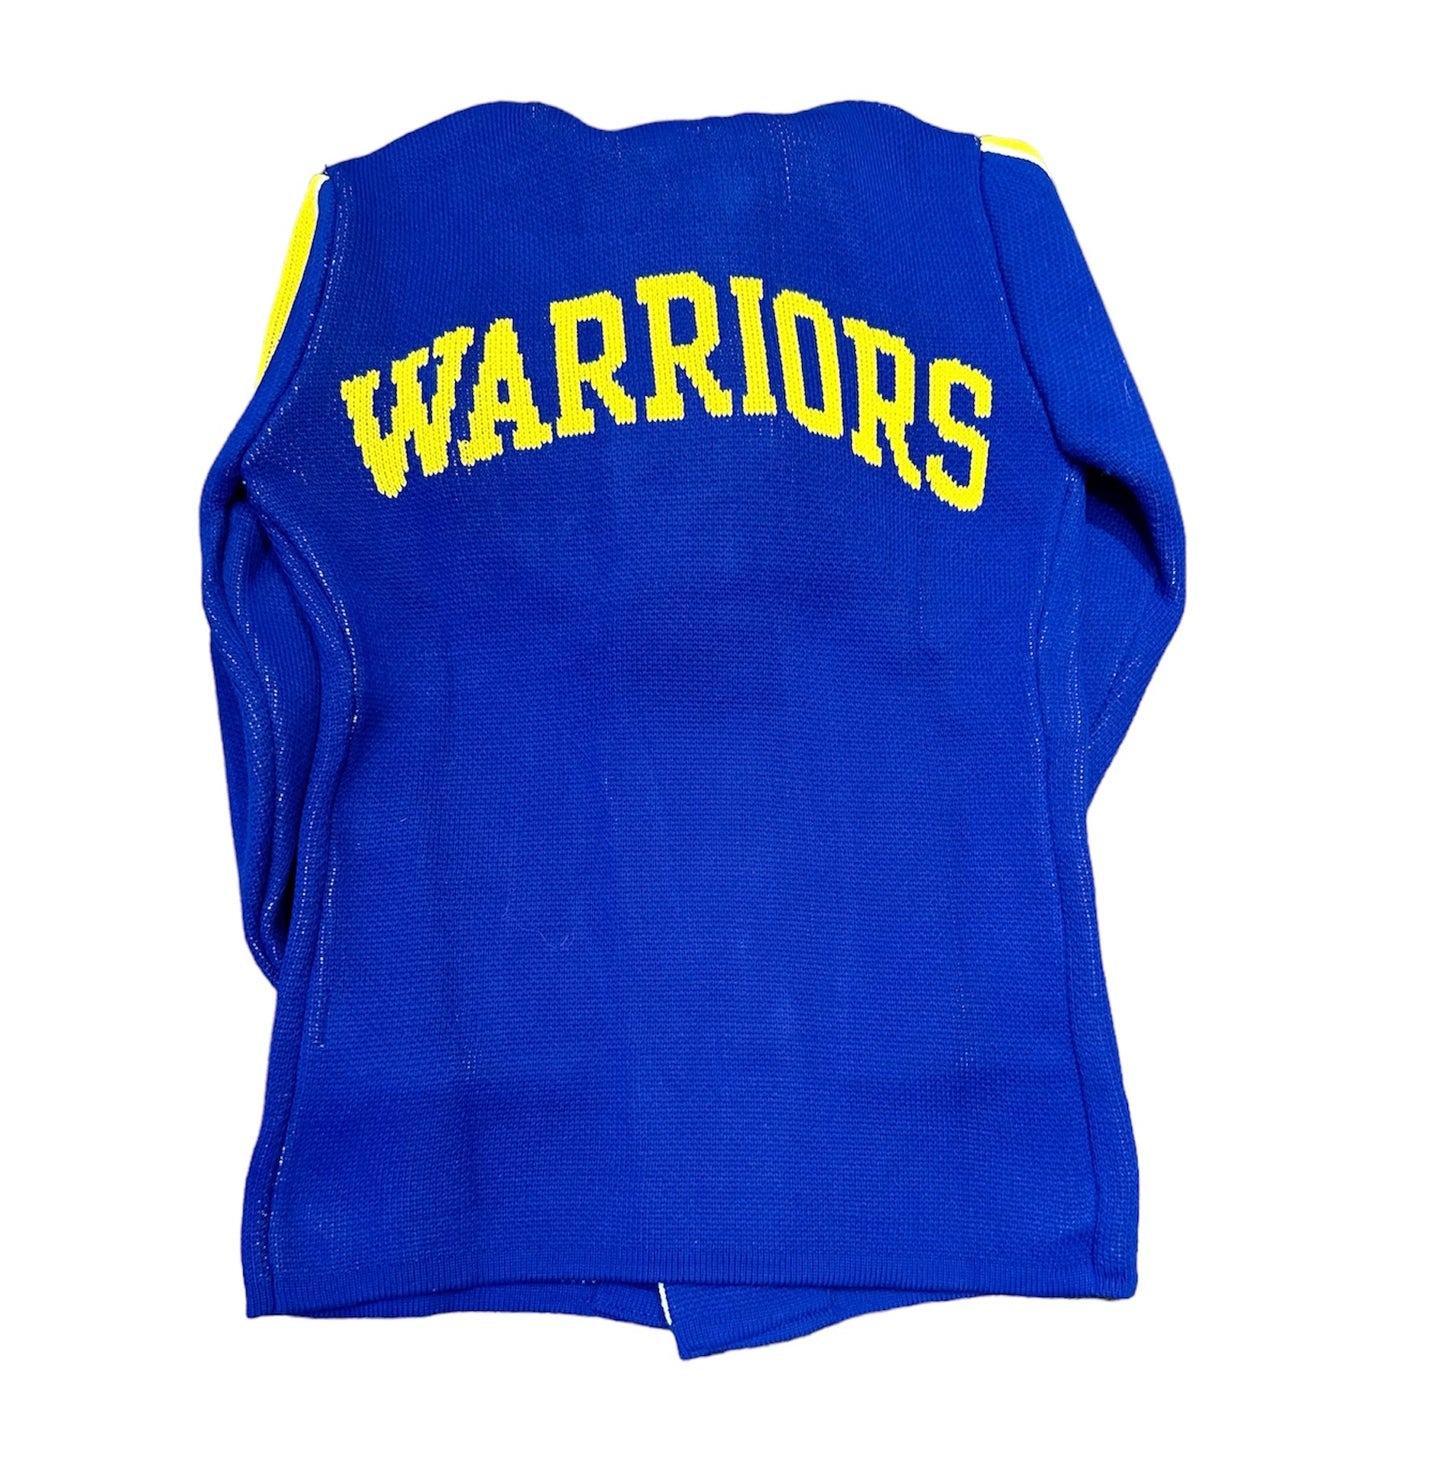 Golden state warriors Glll sweater jacket